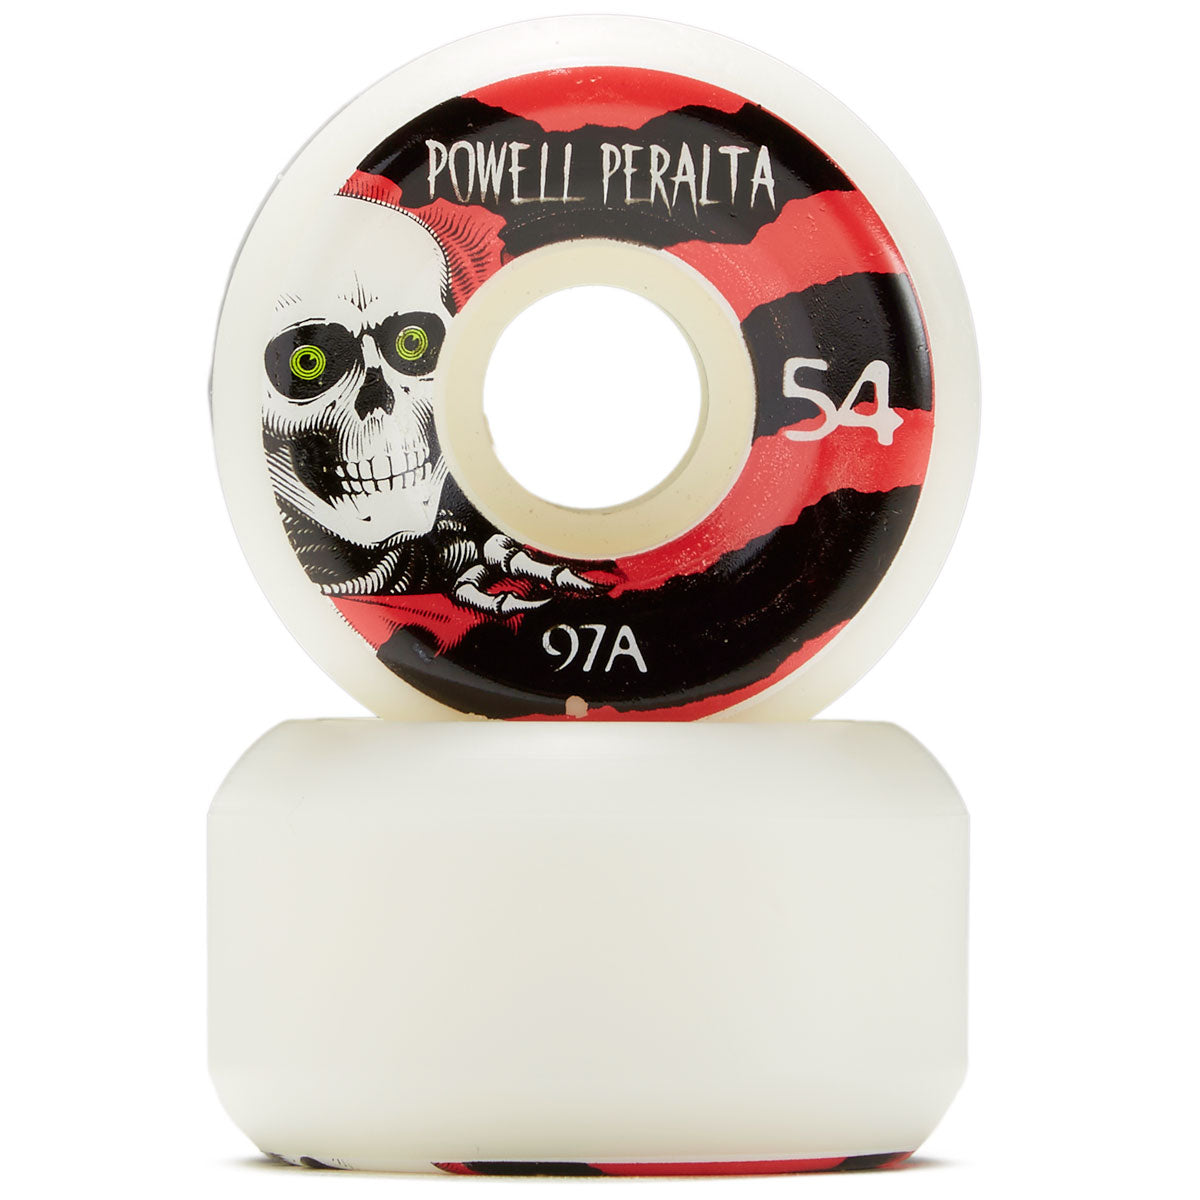 Powell Peralta Ripper 4 97A Skateboard Wheels - White - 54mm image 2